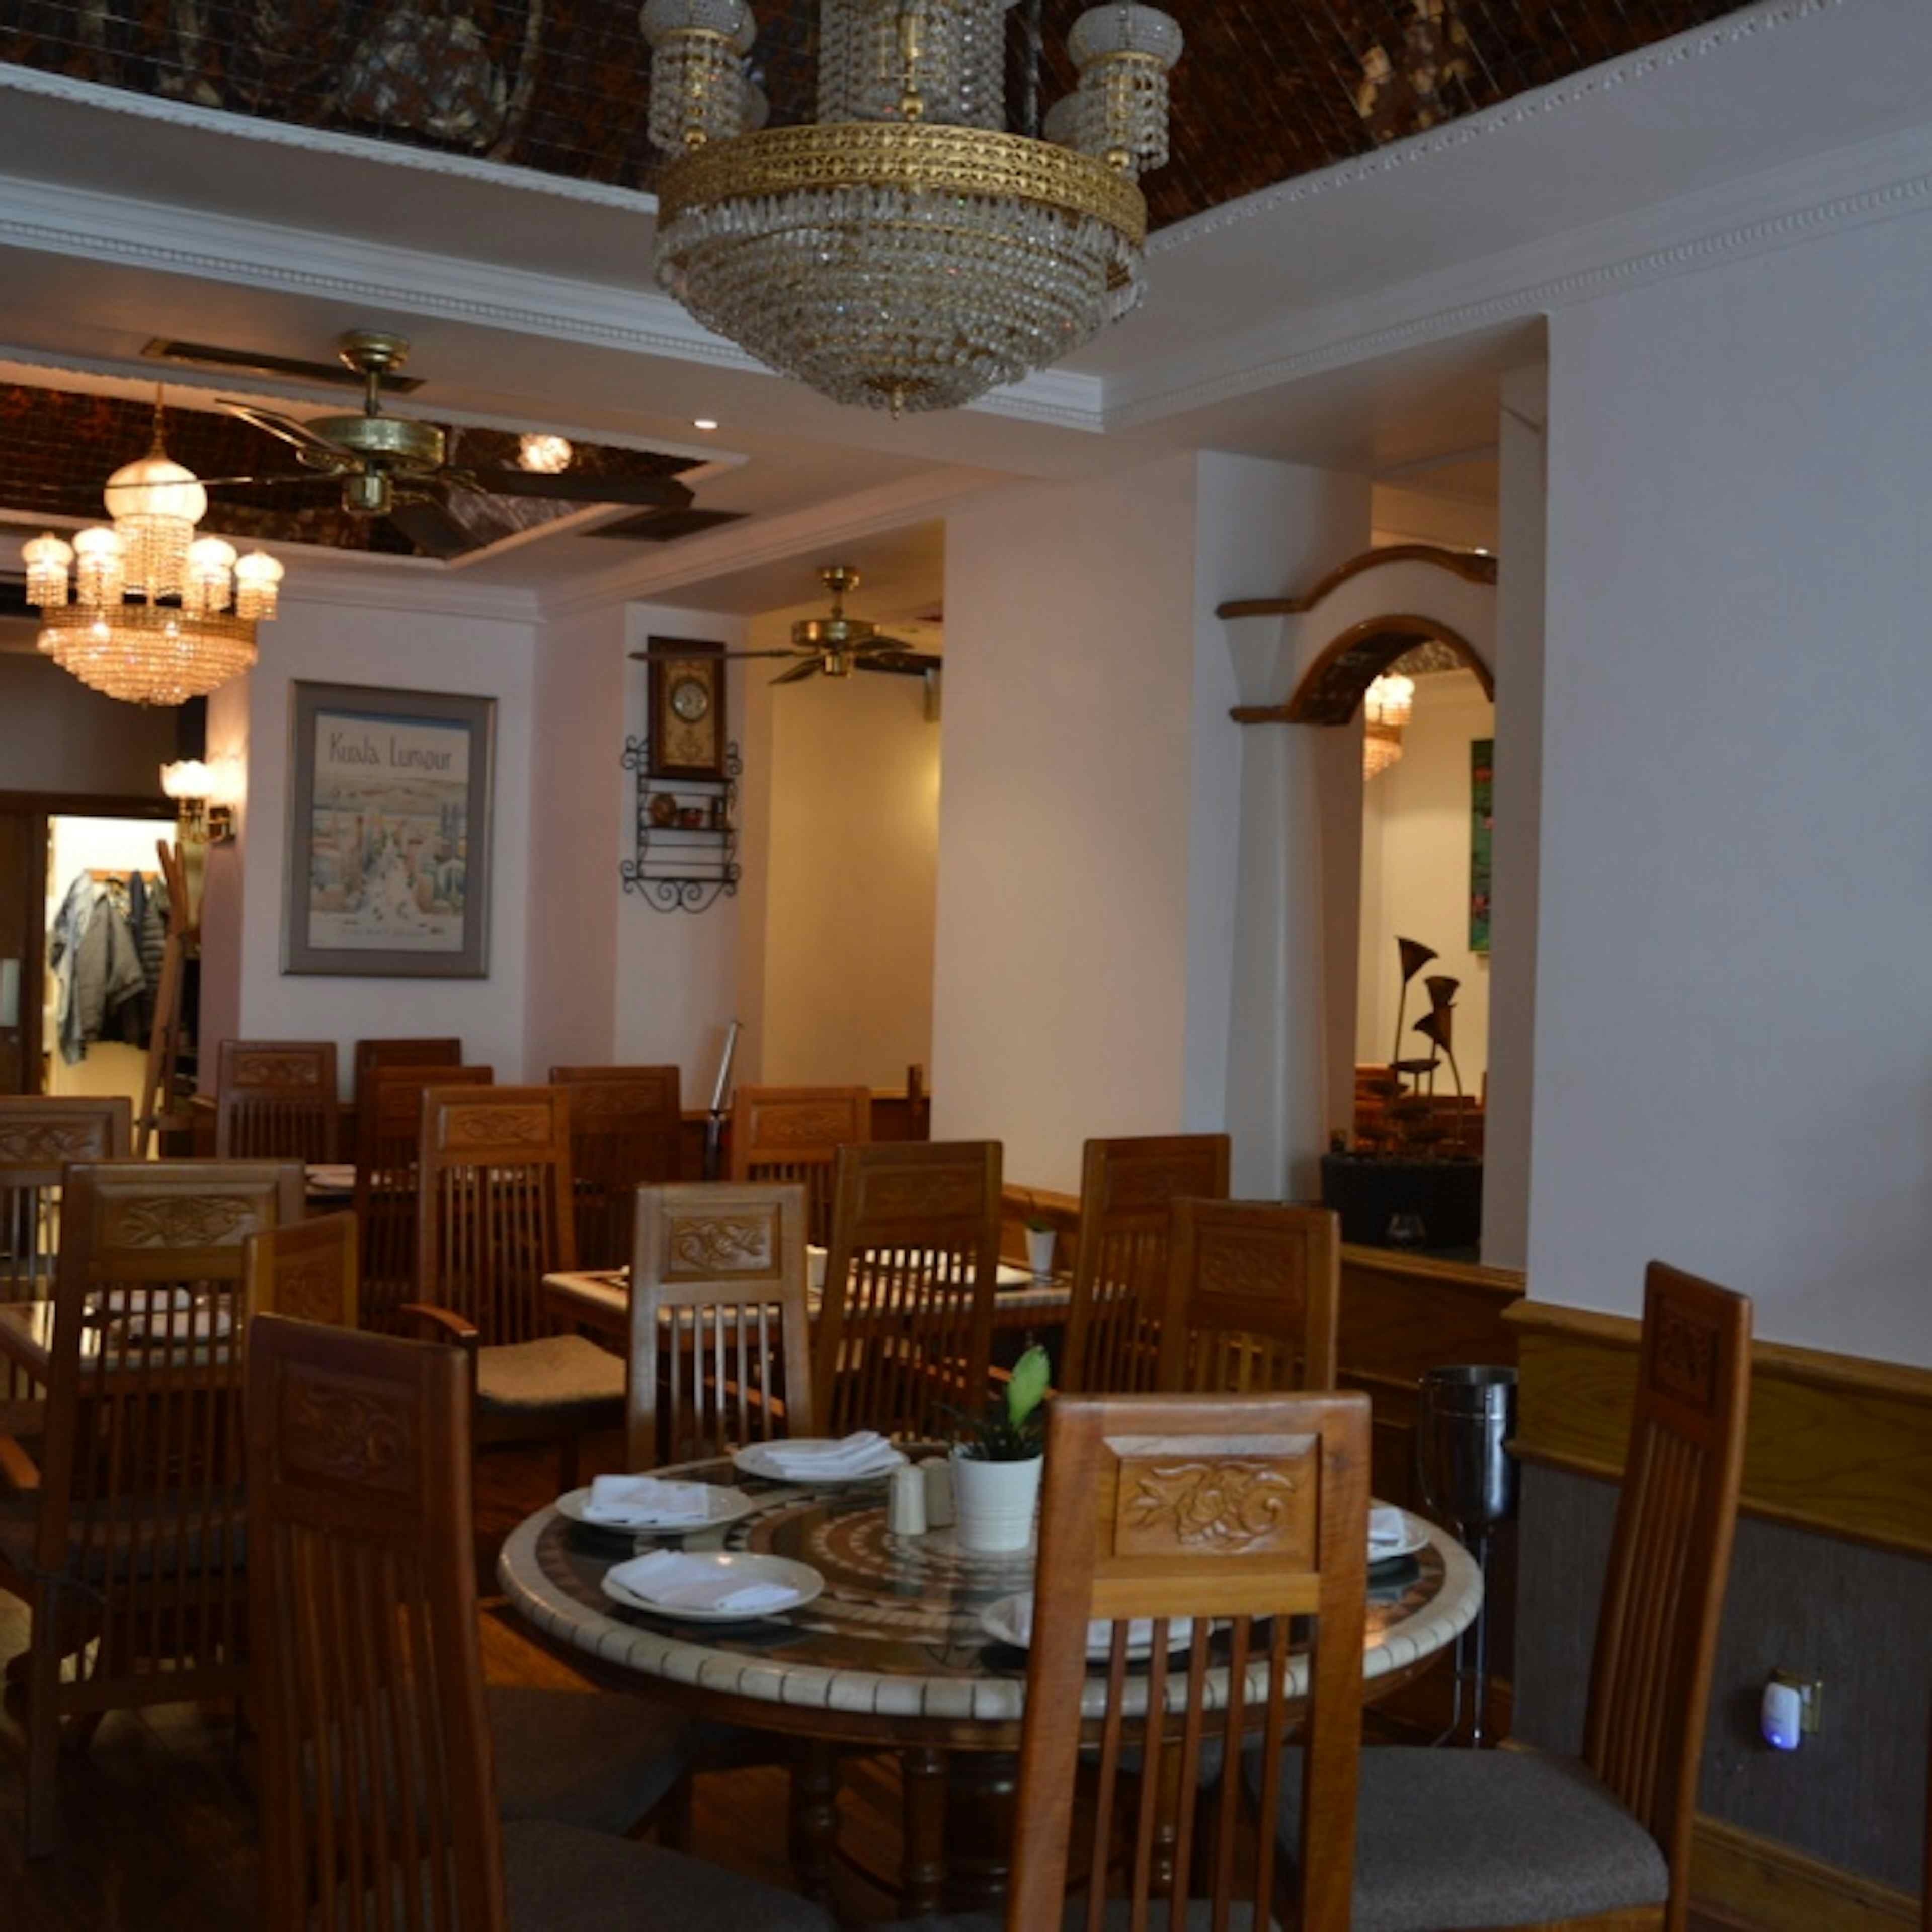 Lagenda Restaurant Bar and Dining Rooms - Restaurant image 2